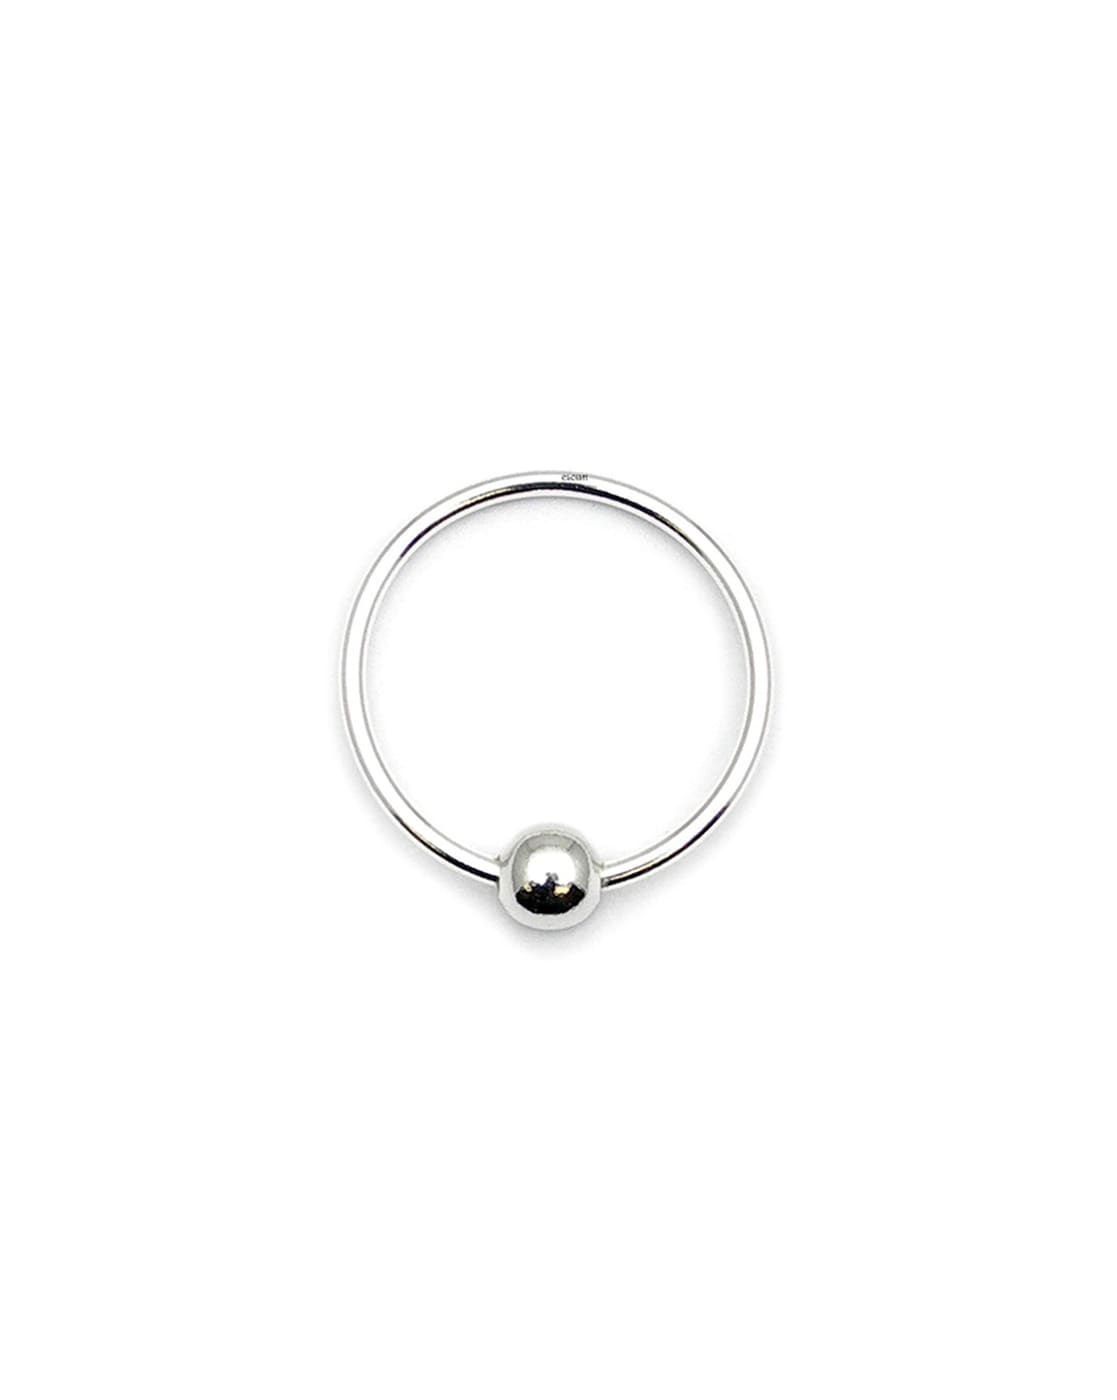 Amazon.com: 925 Silver Nose Ring Hoop - 18 Gauge Nose Piercing For Women  Men - Snug Nose Hoop Adjustable : Handmade Products